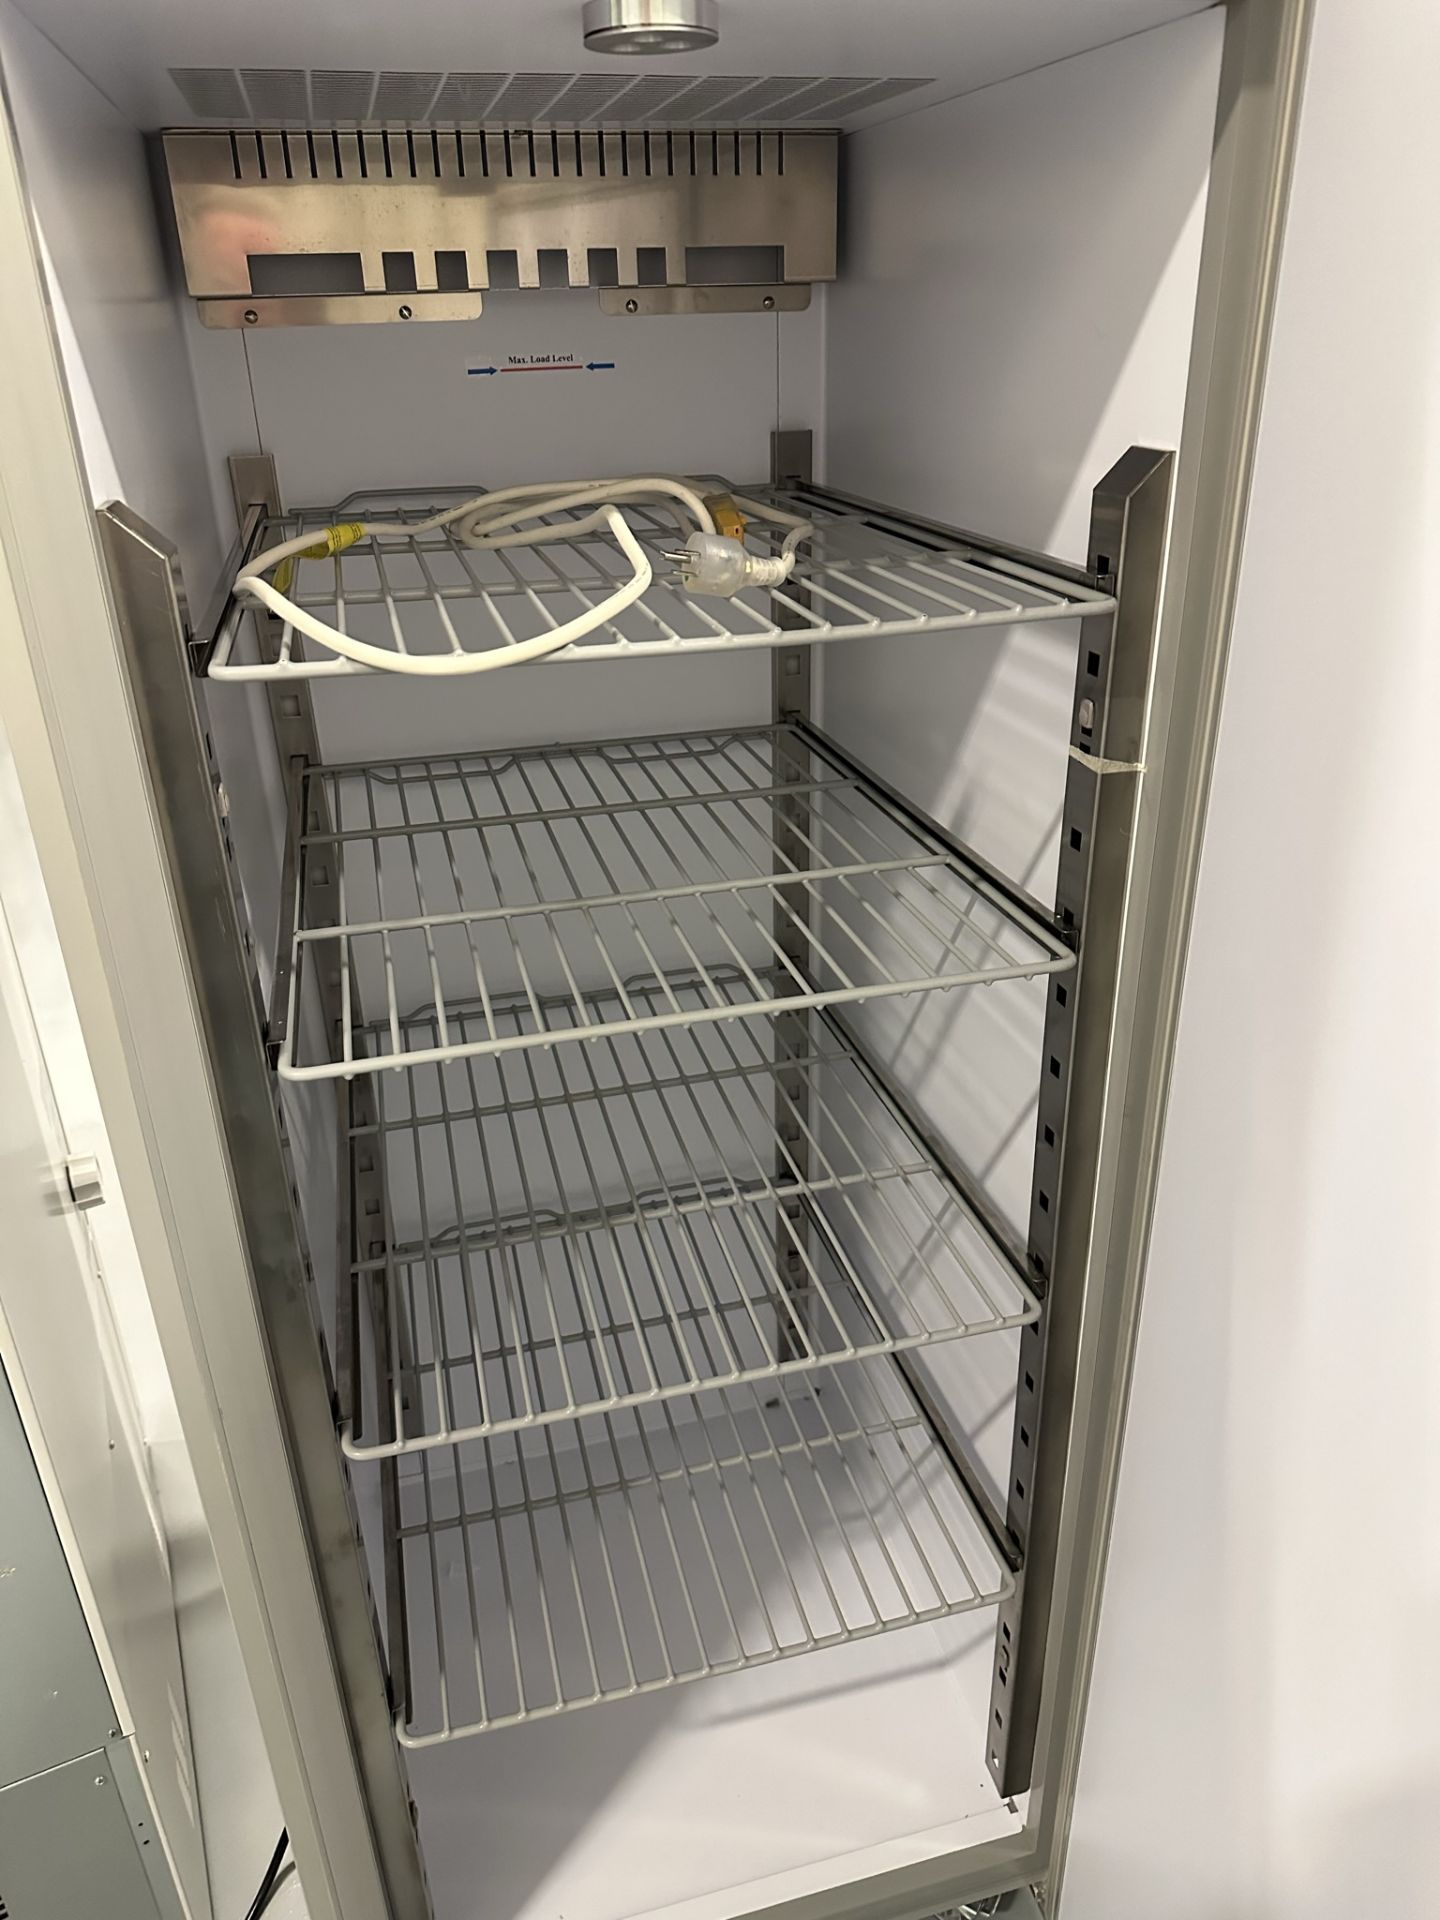 Laboratory Refrigerator - Image 3 of 4